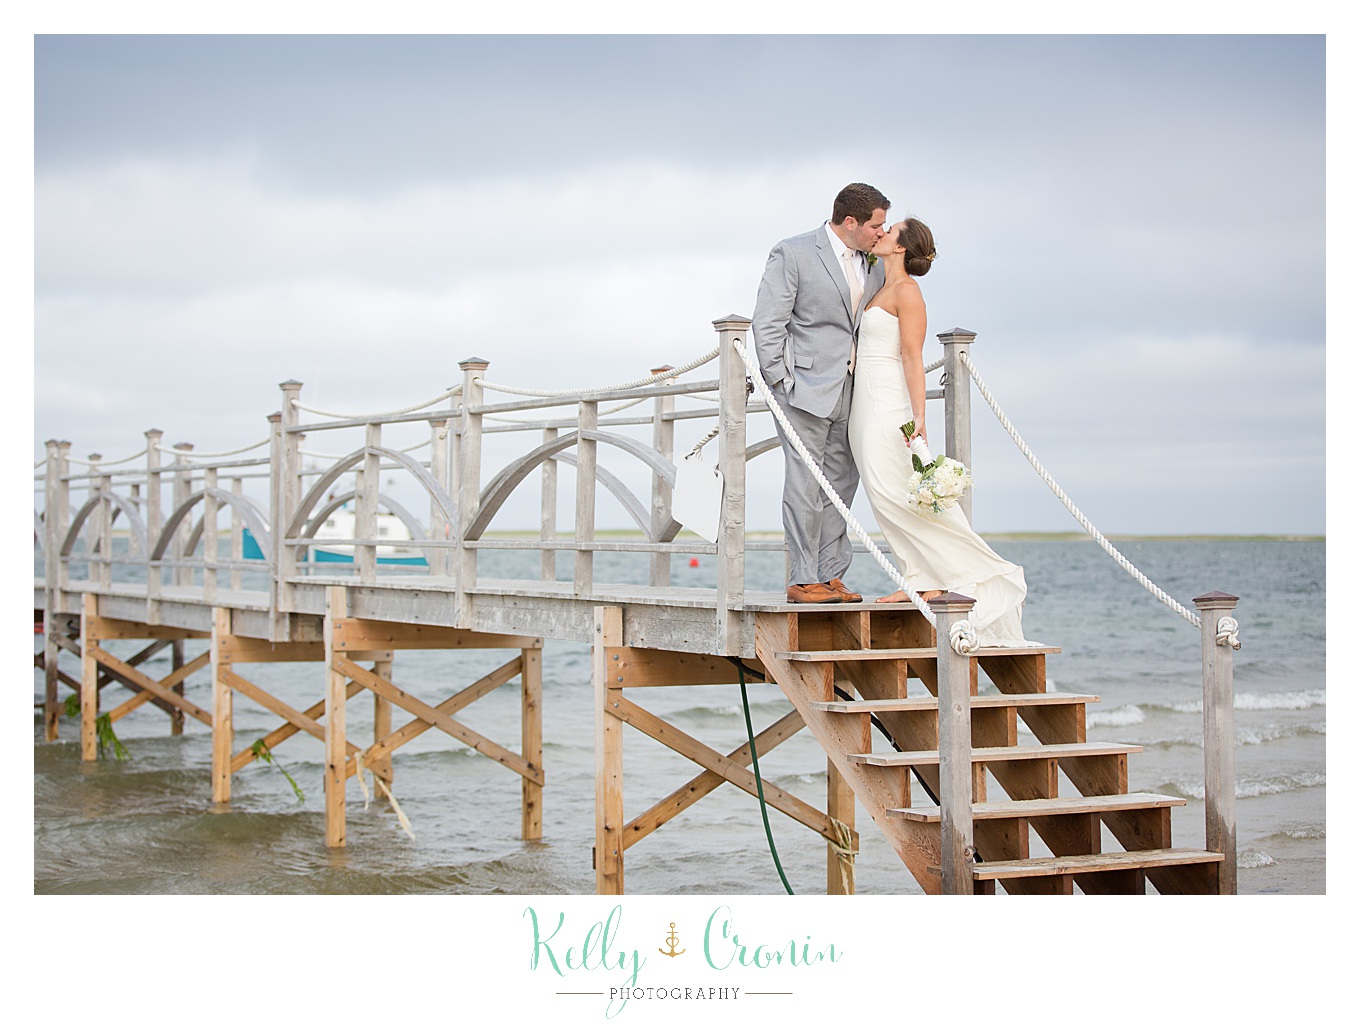 A newlywed couple kiss on a pier | Kelly Cronin Photography | Lighthouse Beach